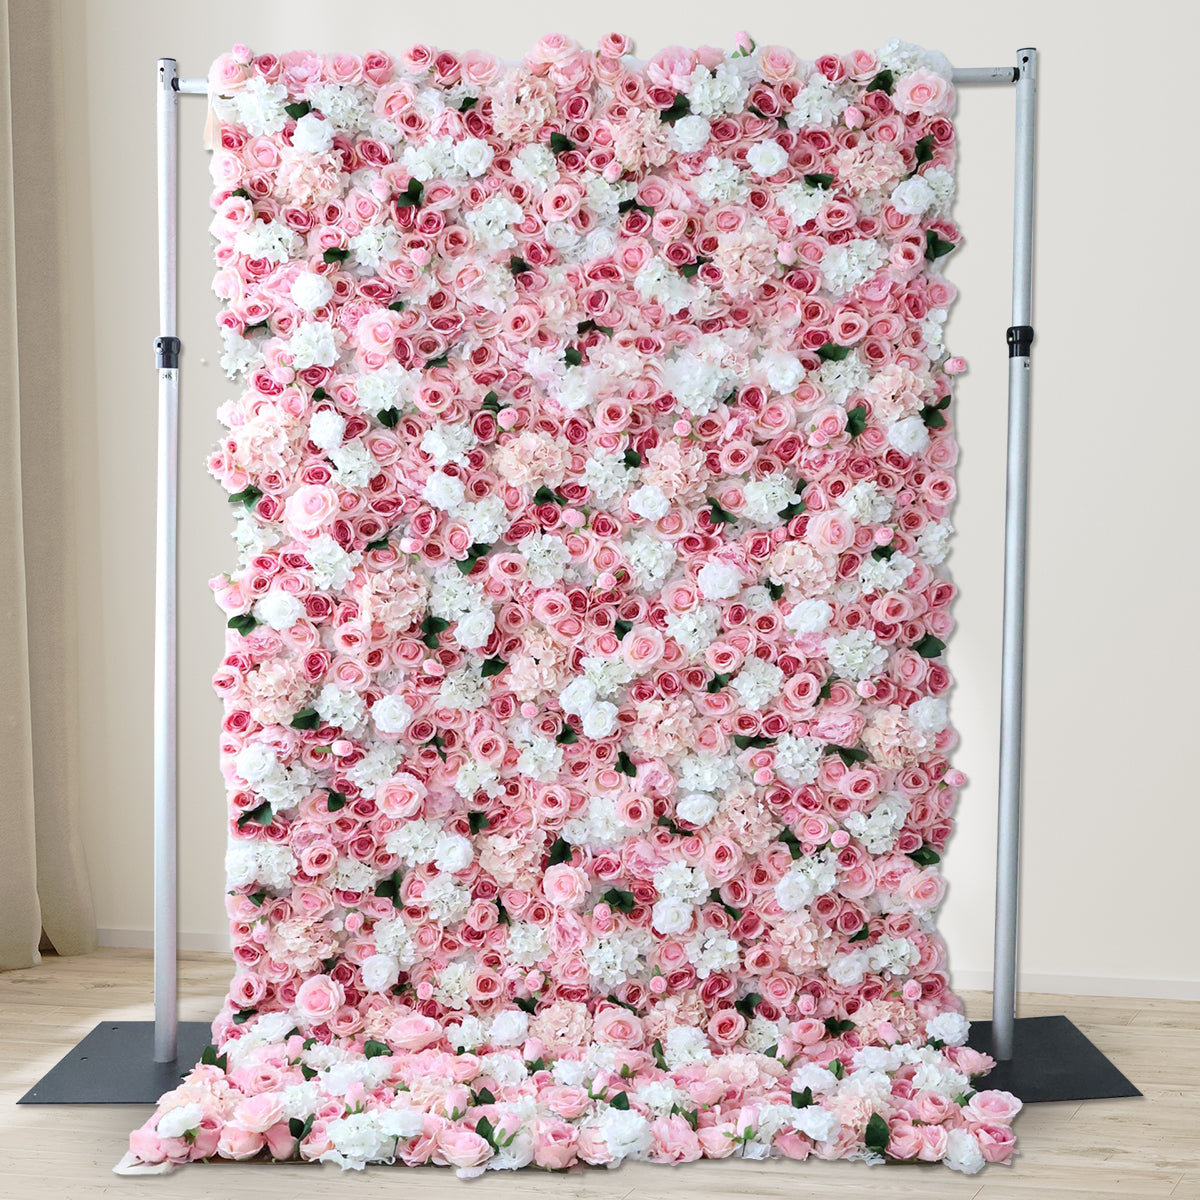 3D Artificial Flower Wall Arrangement Wedding Party Birthday Backdrop Decor HQ1312